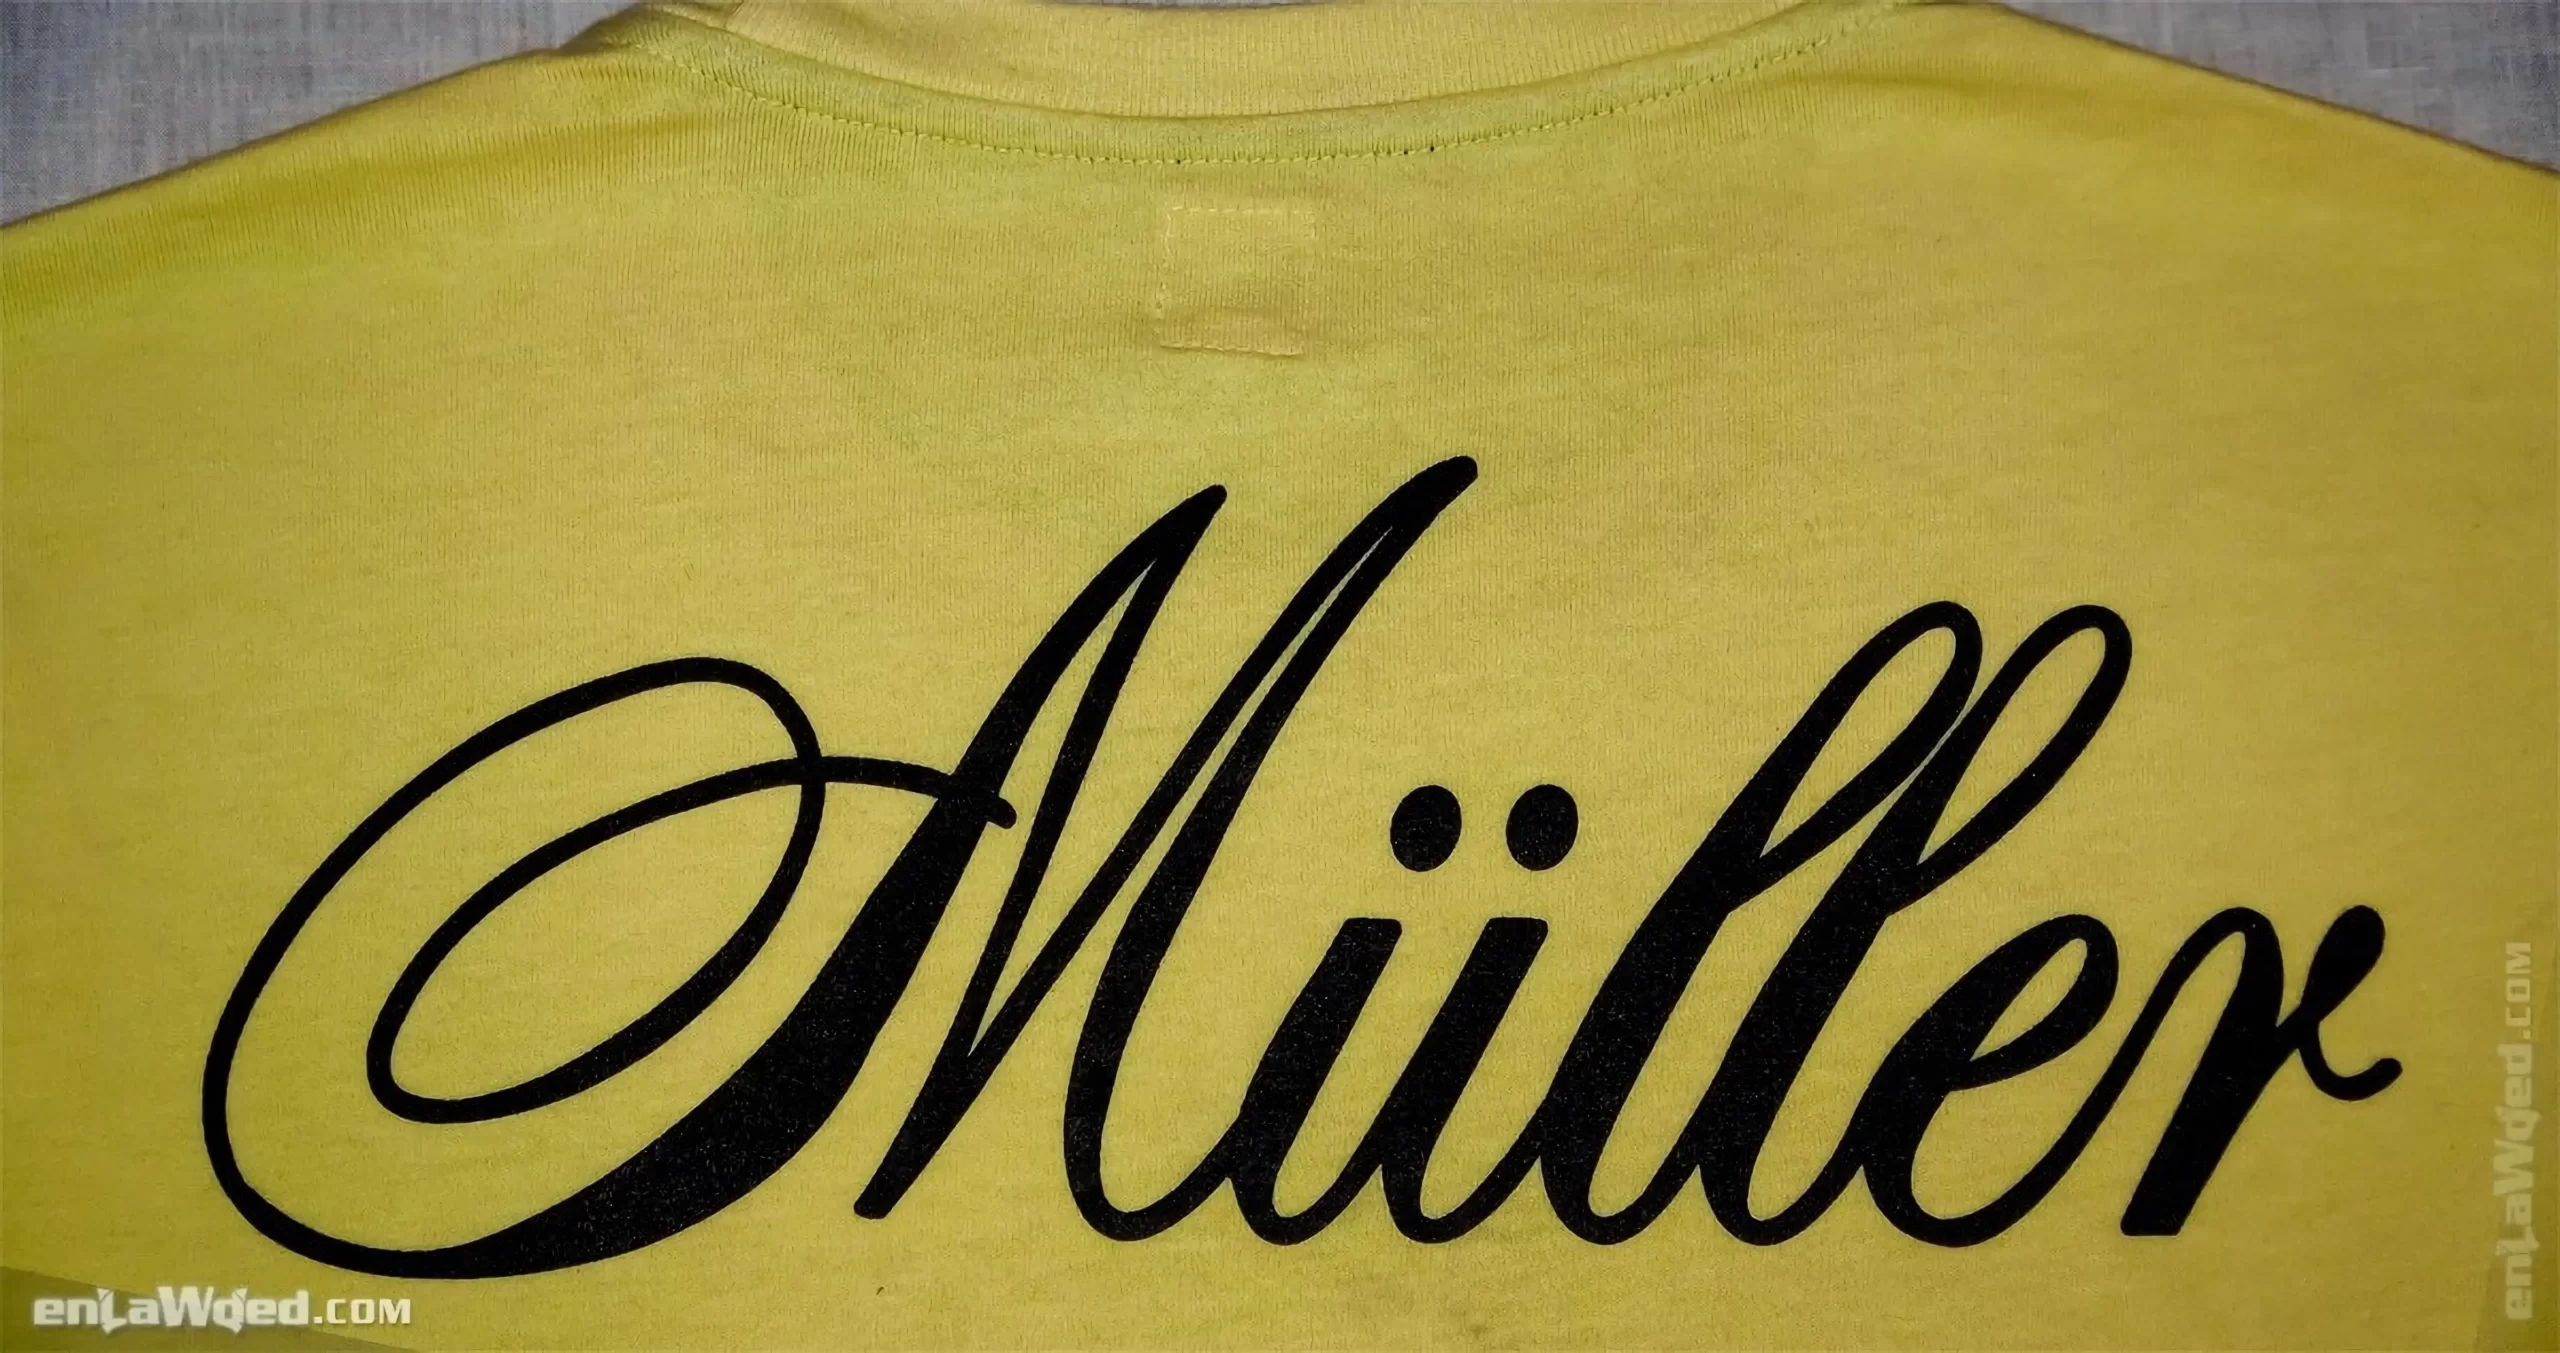 Men’s 2006 Gerd Müller Player’s Club T-Shirt by Adidas: Erfolgsbilanz (EnLawded.com file #lmchelmbl5elgtd76n)